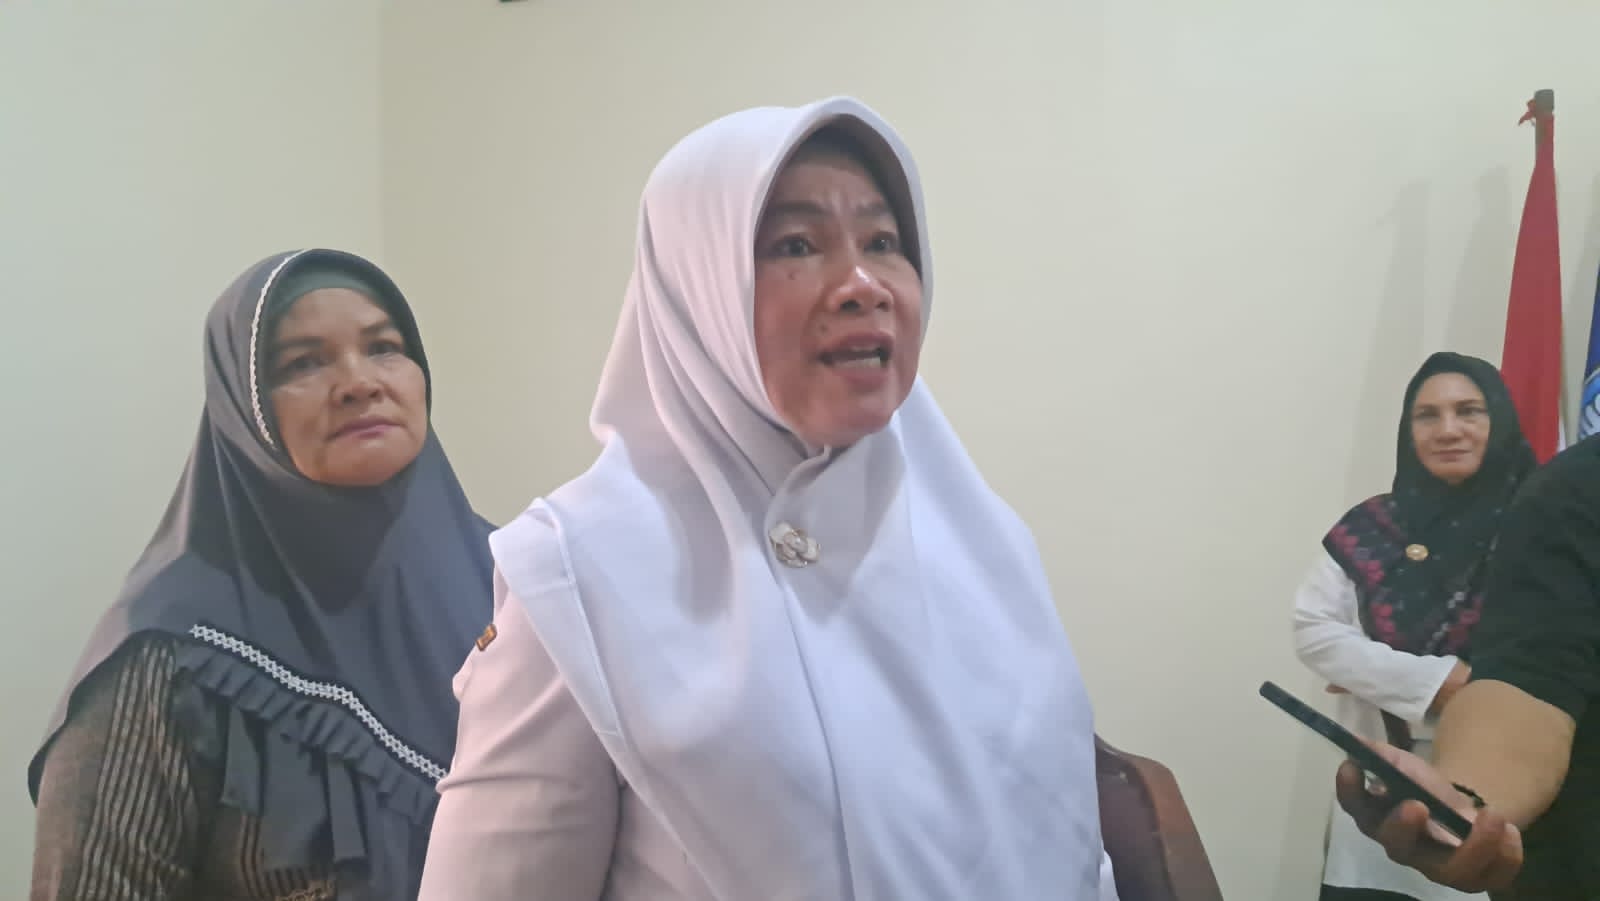 Pelaku Penganiyaan Siswa SMP di Palembang Bukan Oknum Guru, Kepsek: Sudah Damai